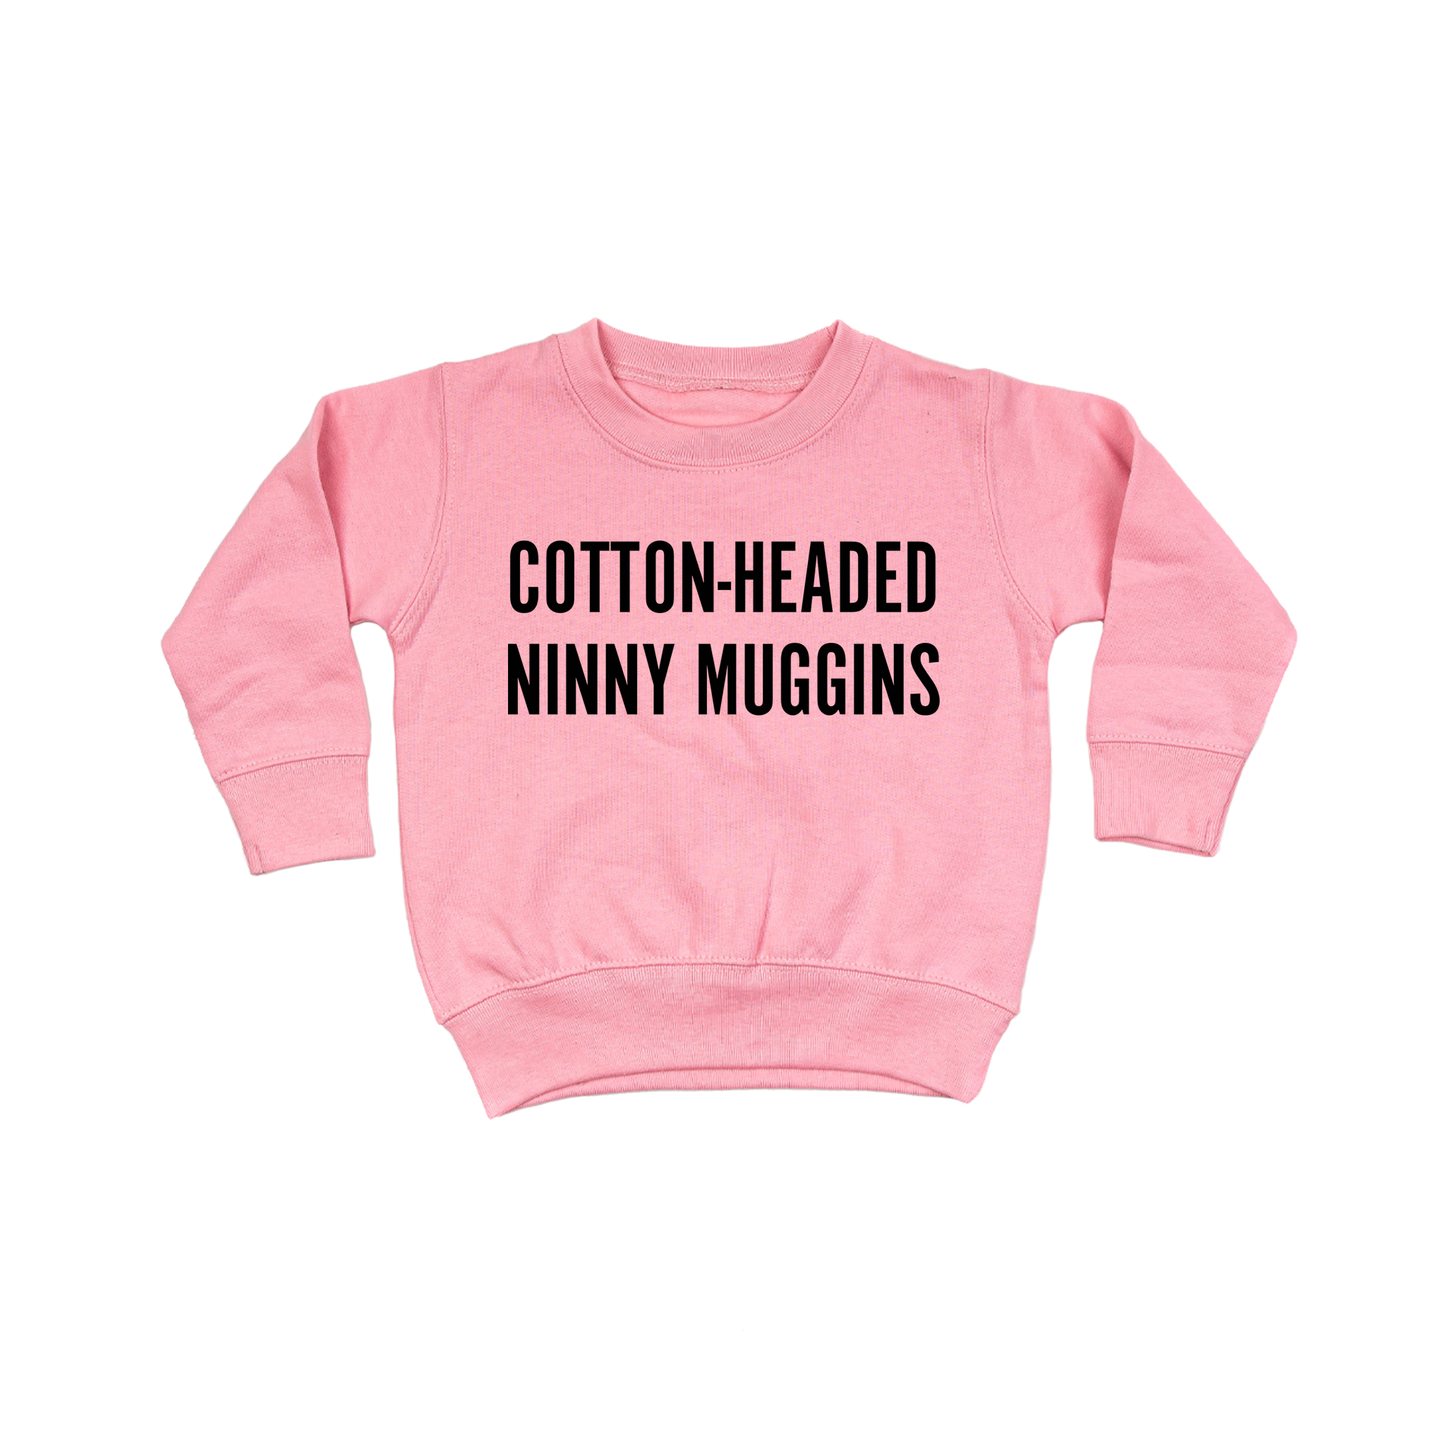 Cotton-Headed Ninny Muggins (Black) - Kids Sweatshirt (Pink)